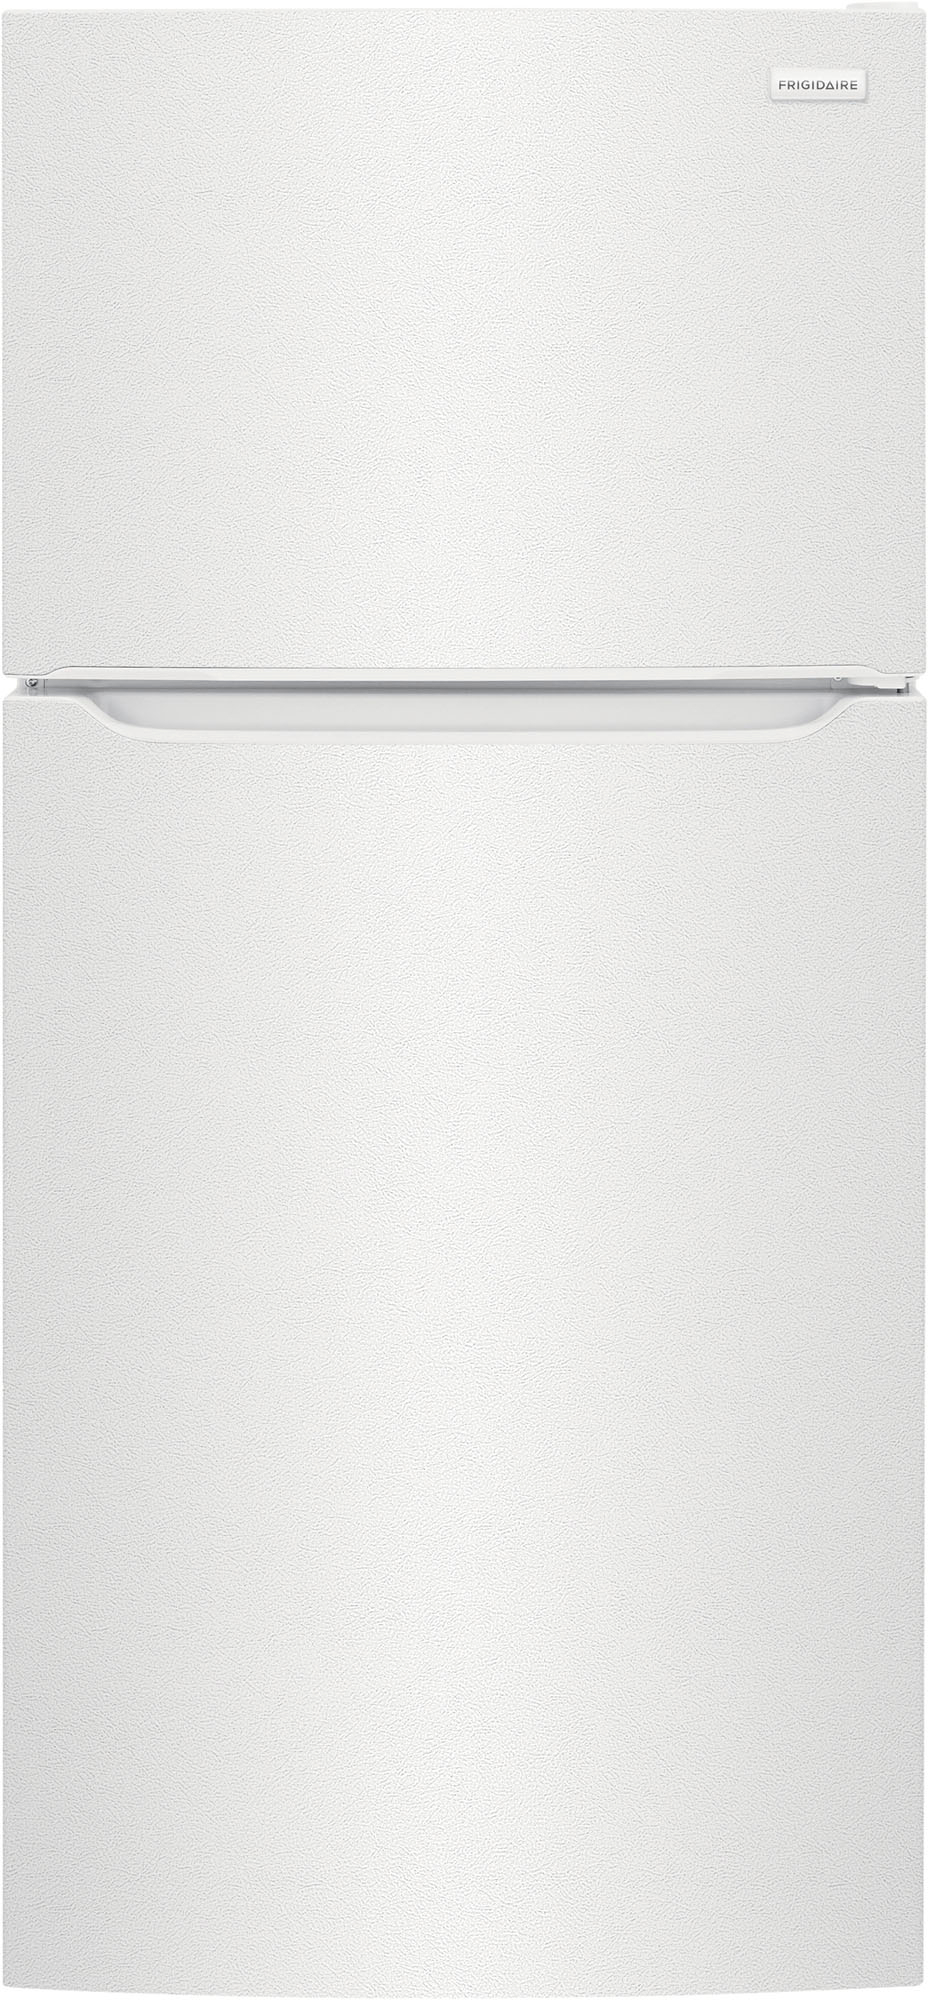 Frigidaire 30 in. 18.3 cu. ft. Top Freezer Refrigerator - Stainless Steel